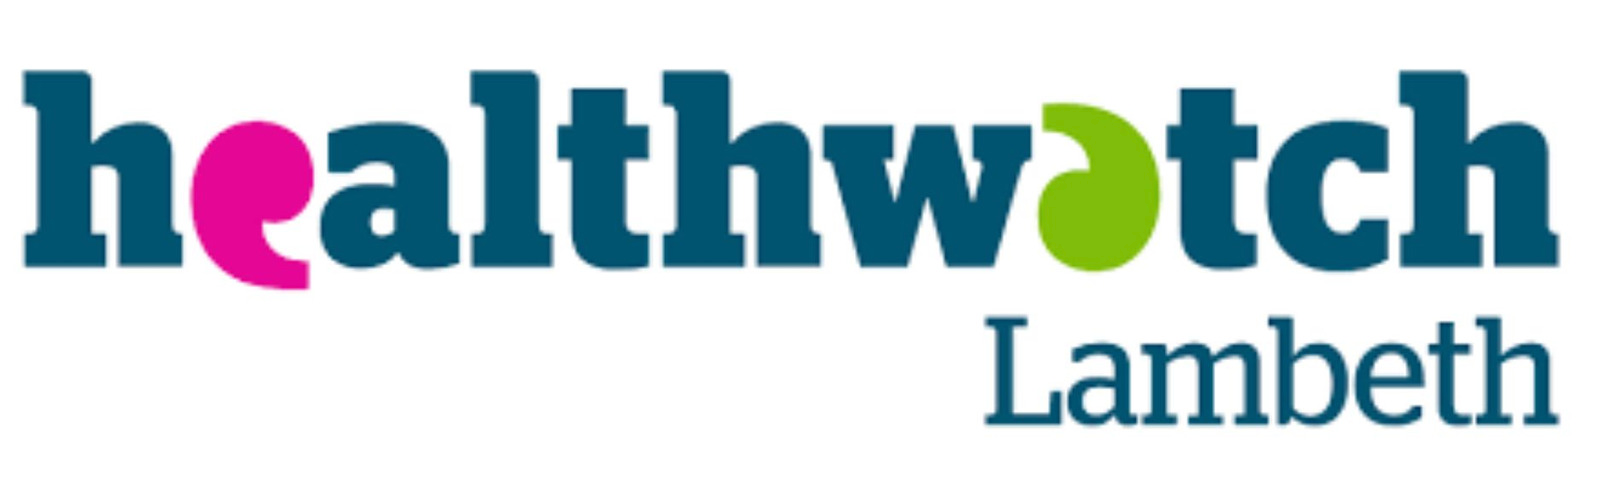 logo for Healthwatch Lambeth